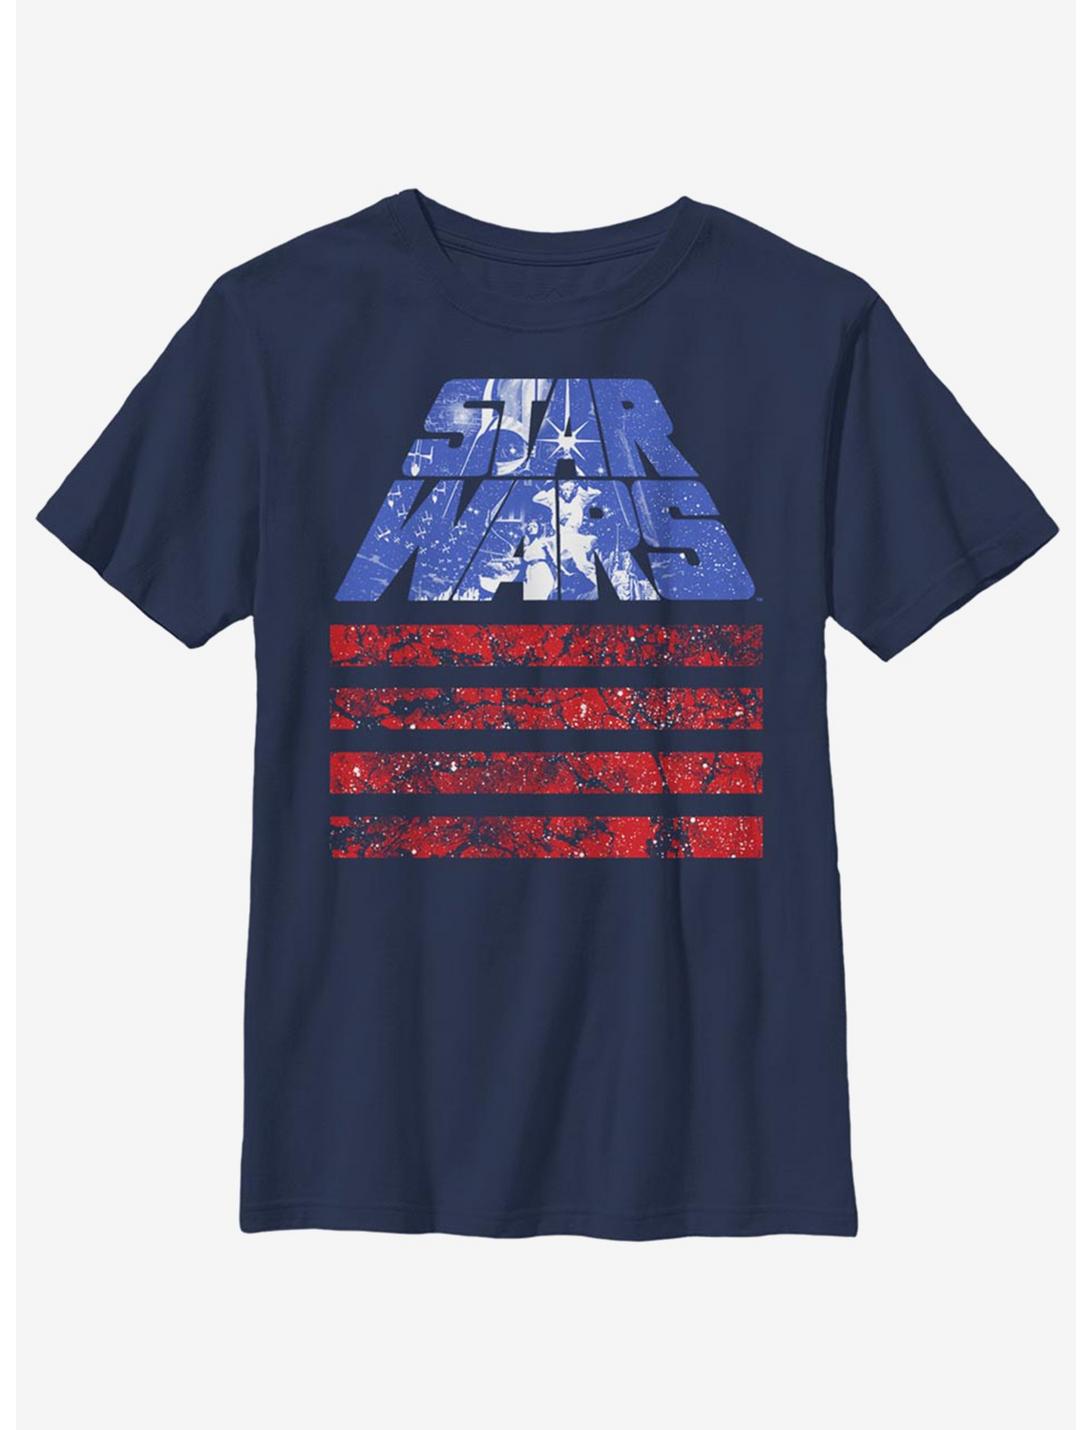 Star Wars Star Glory Youth T-Shirt, NAVY, hi-res